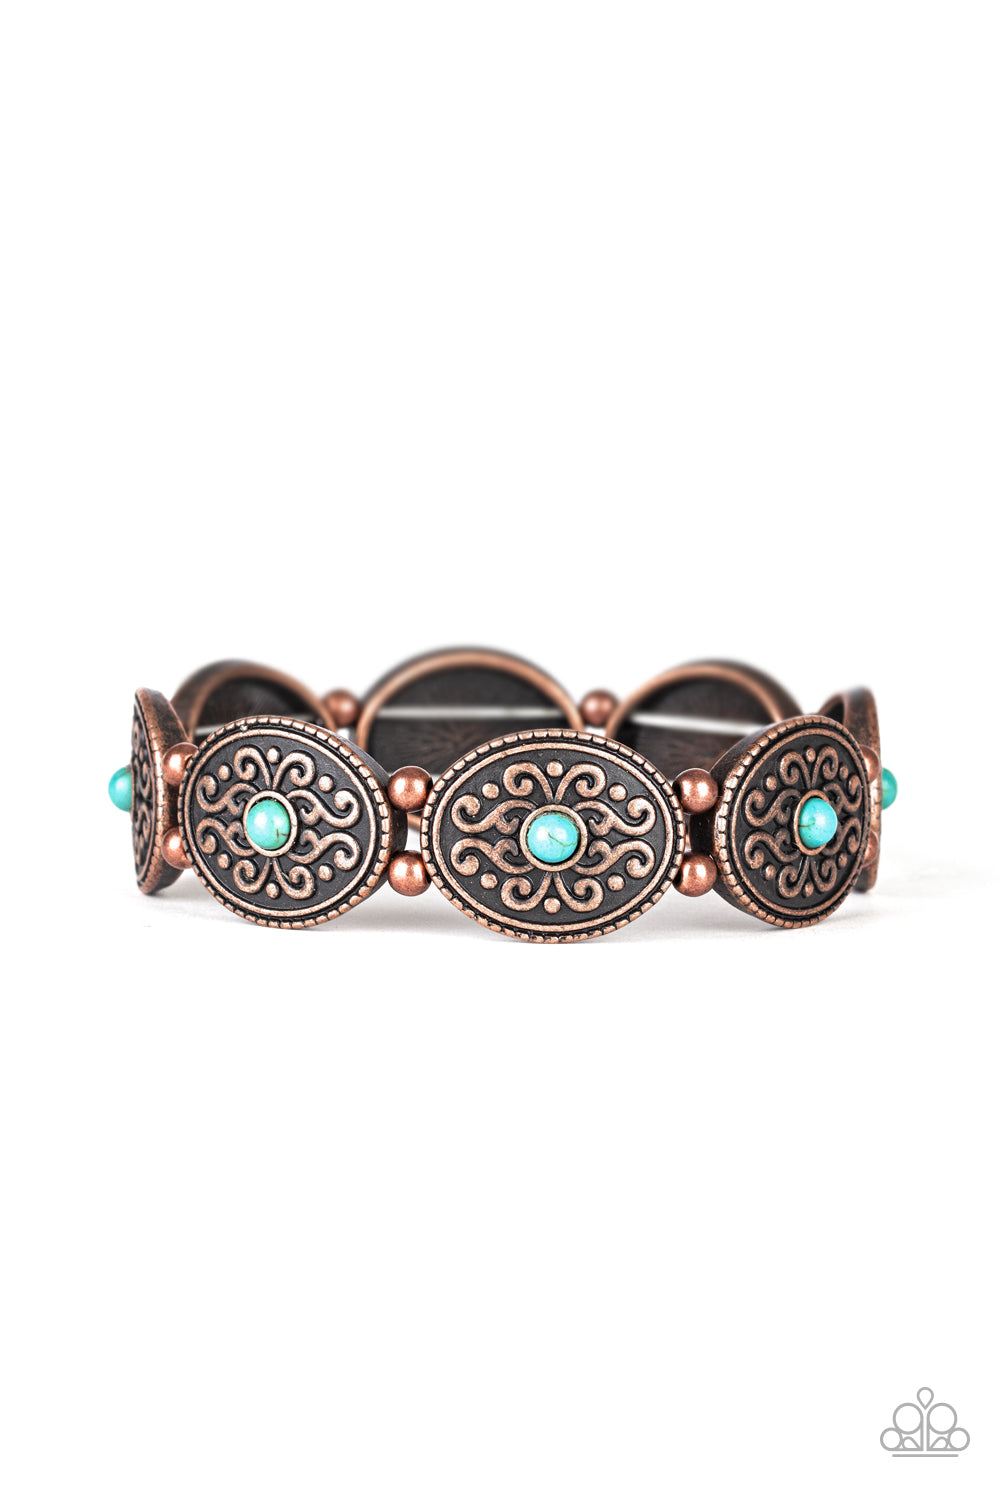 West Wishes - Copper Bracelet Paparazzi Accessories Stretchy Bracelet